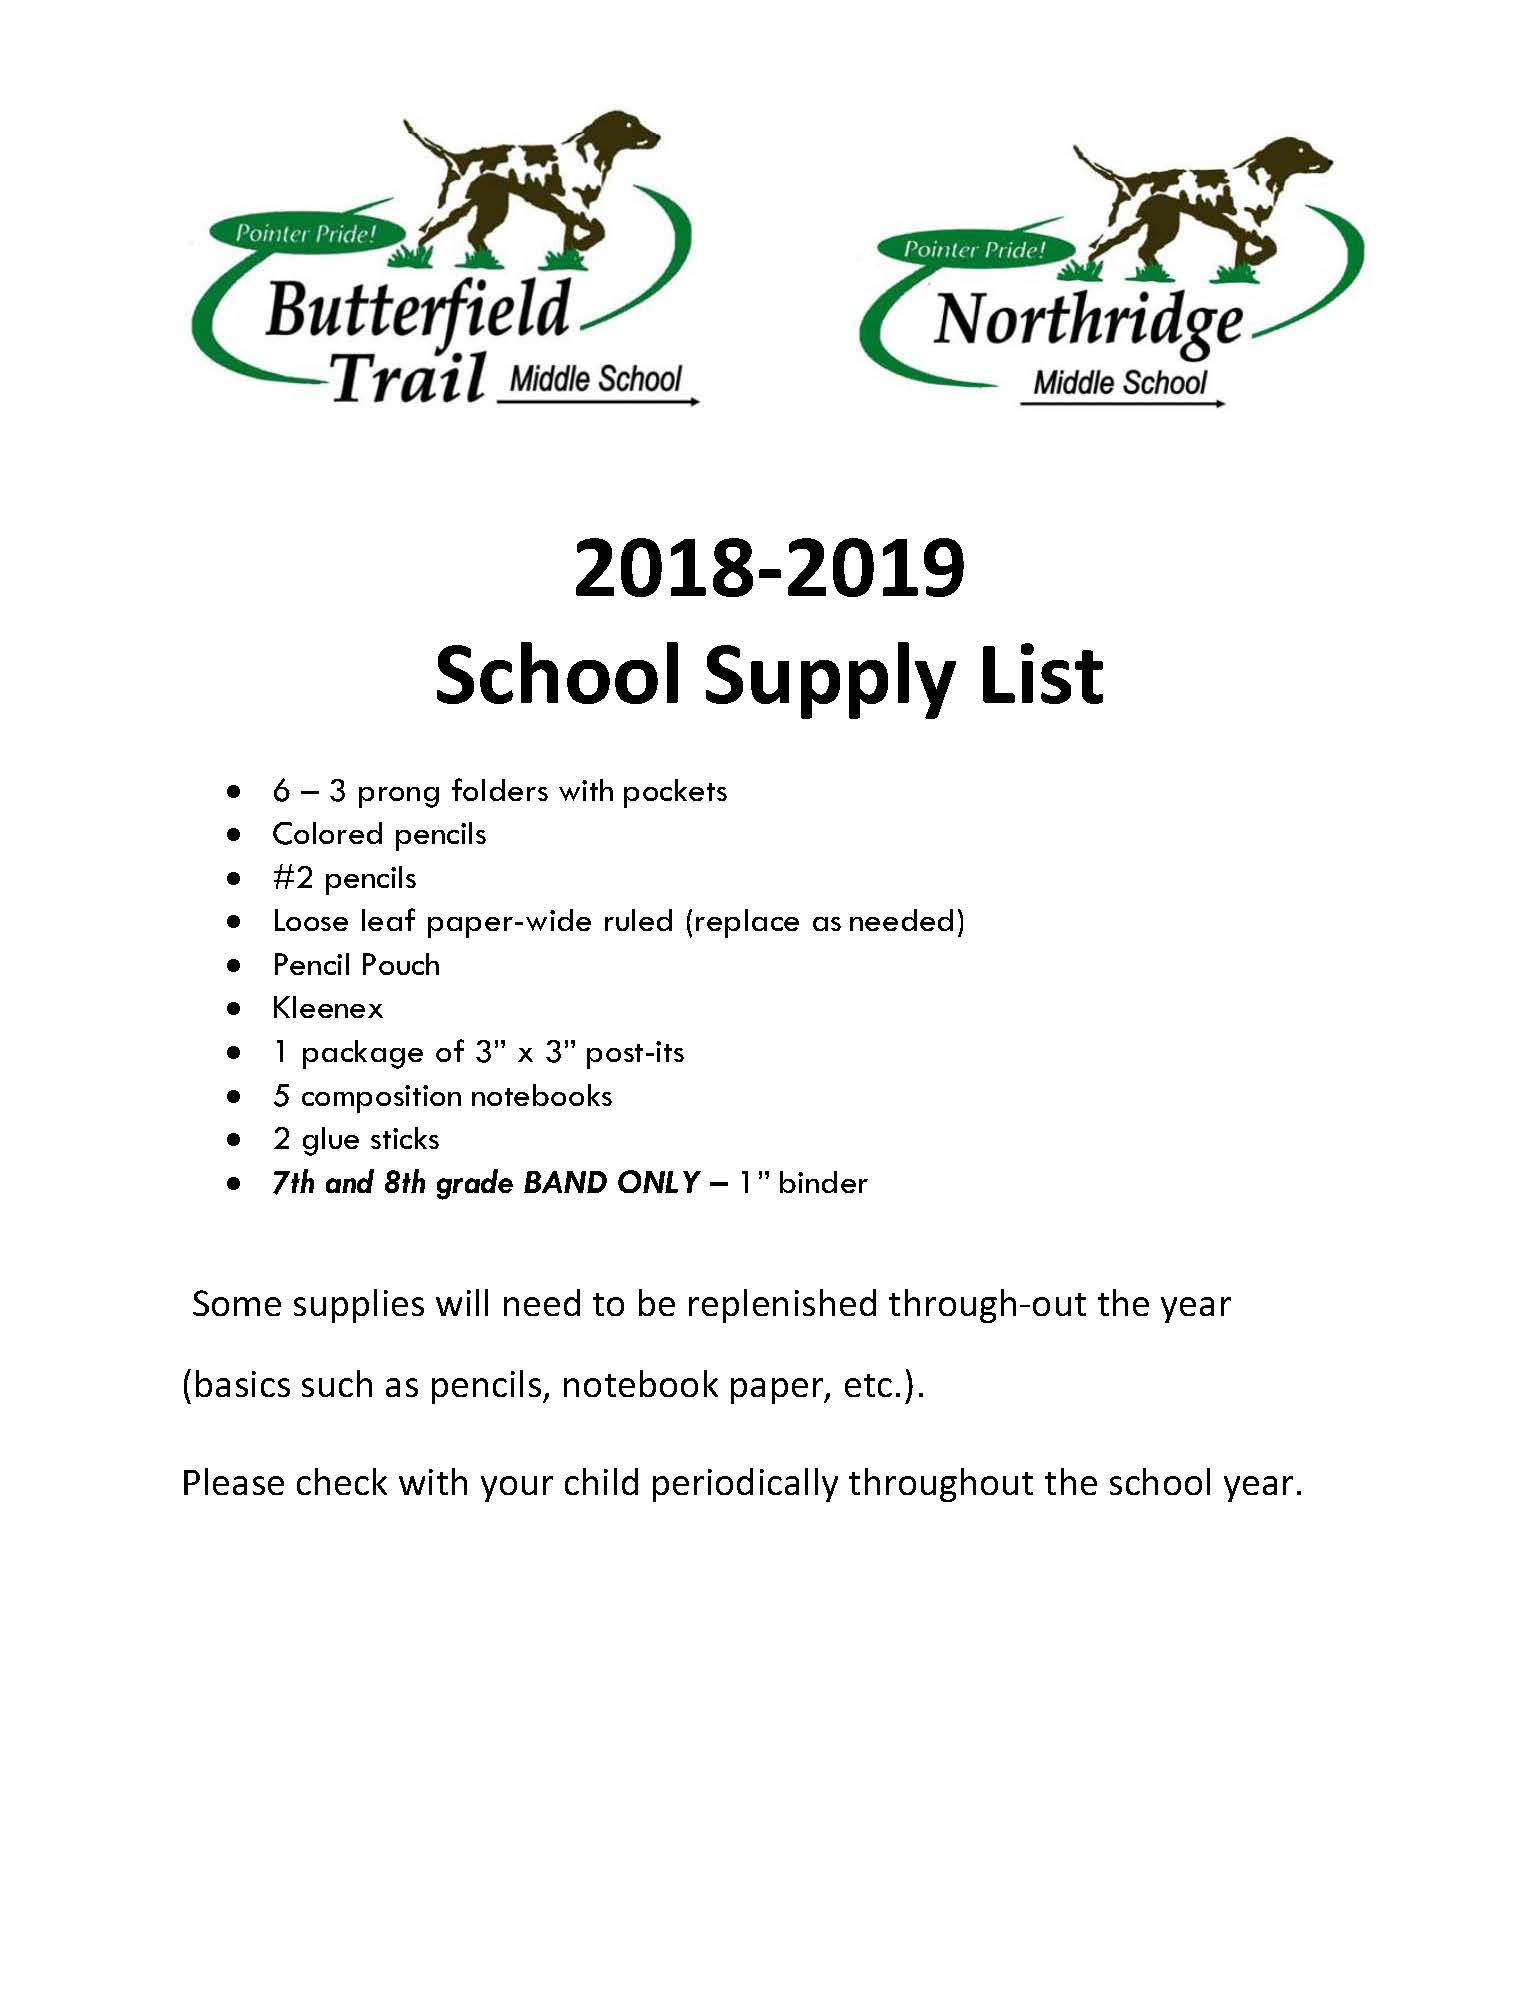 School Supply List 18-19 NRMS